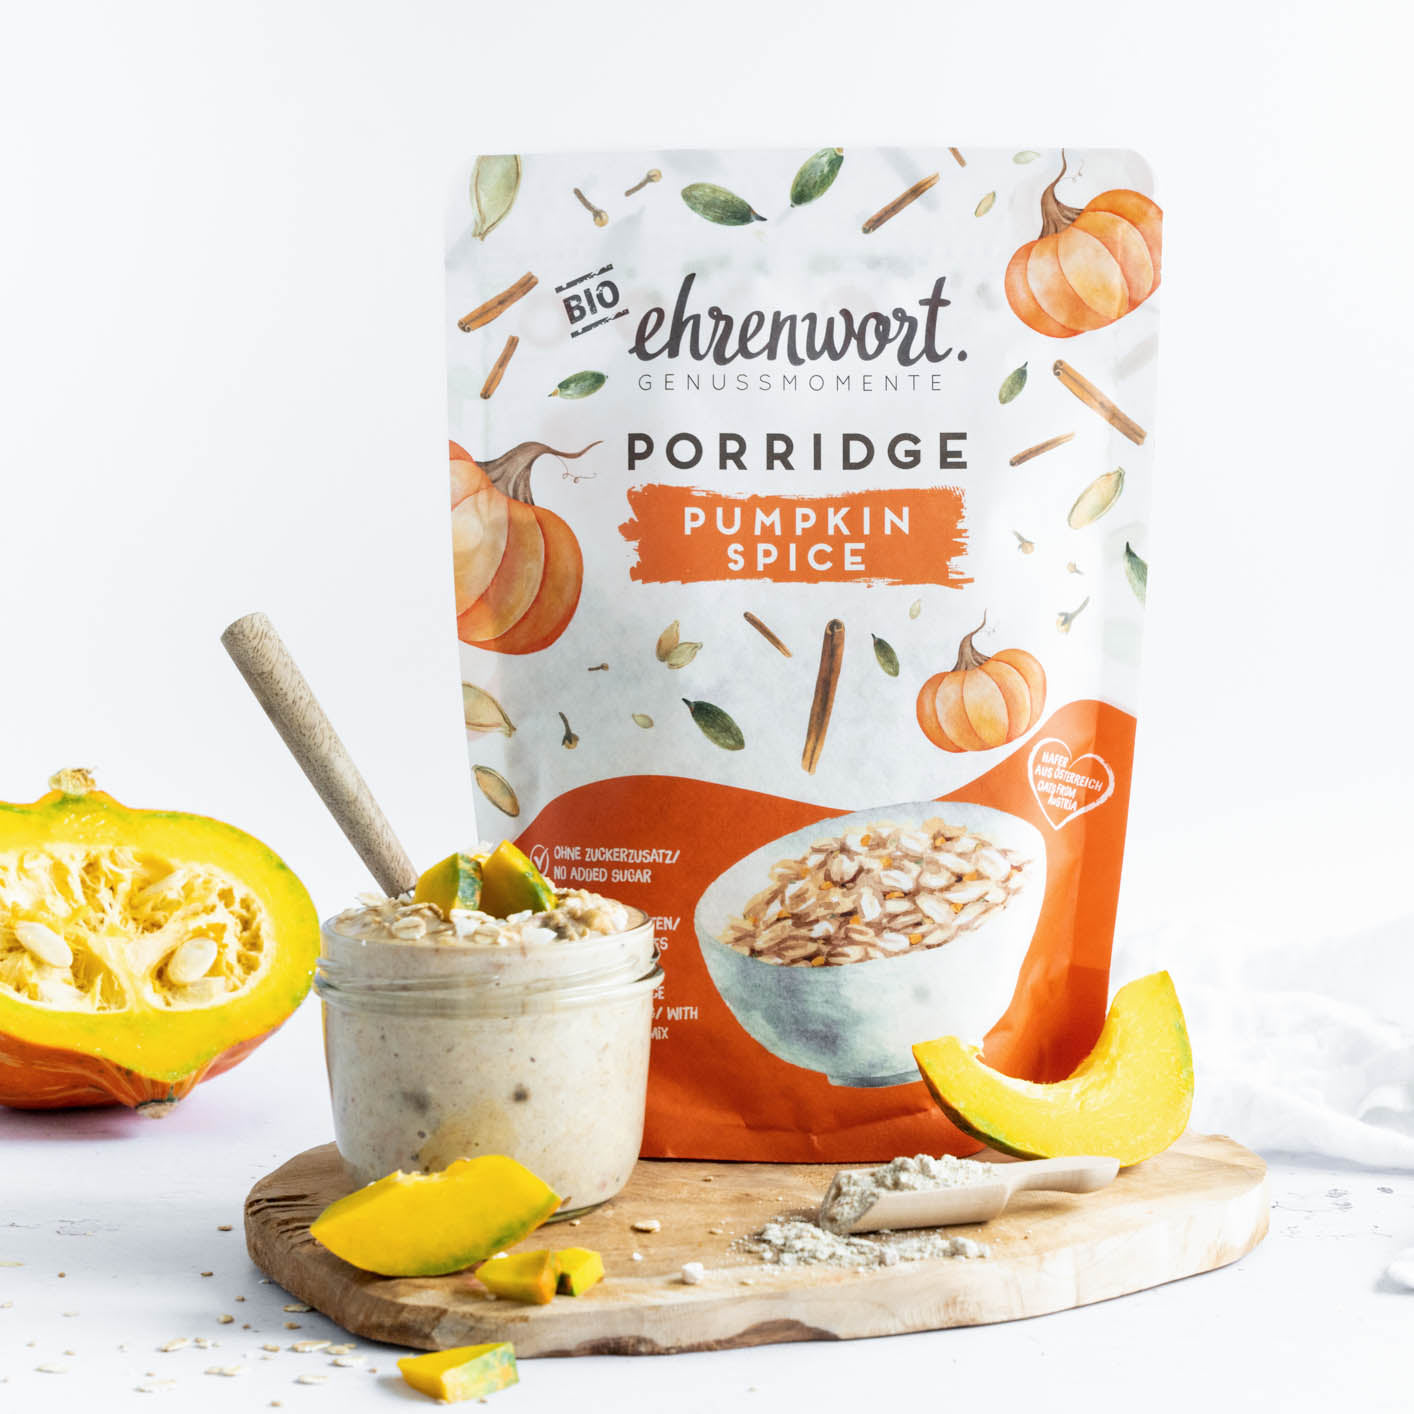 ehrenwort Pumpkin Spice Porridge Mood